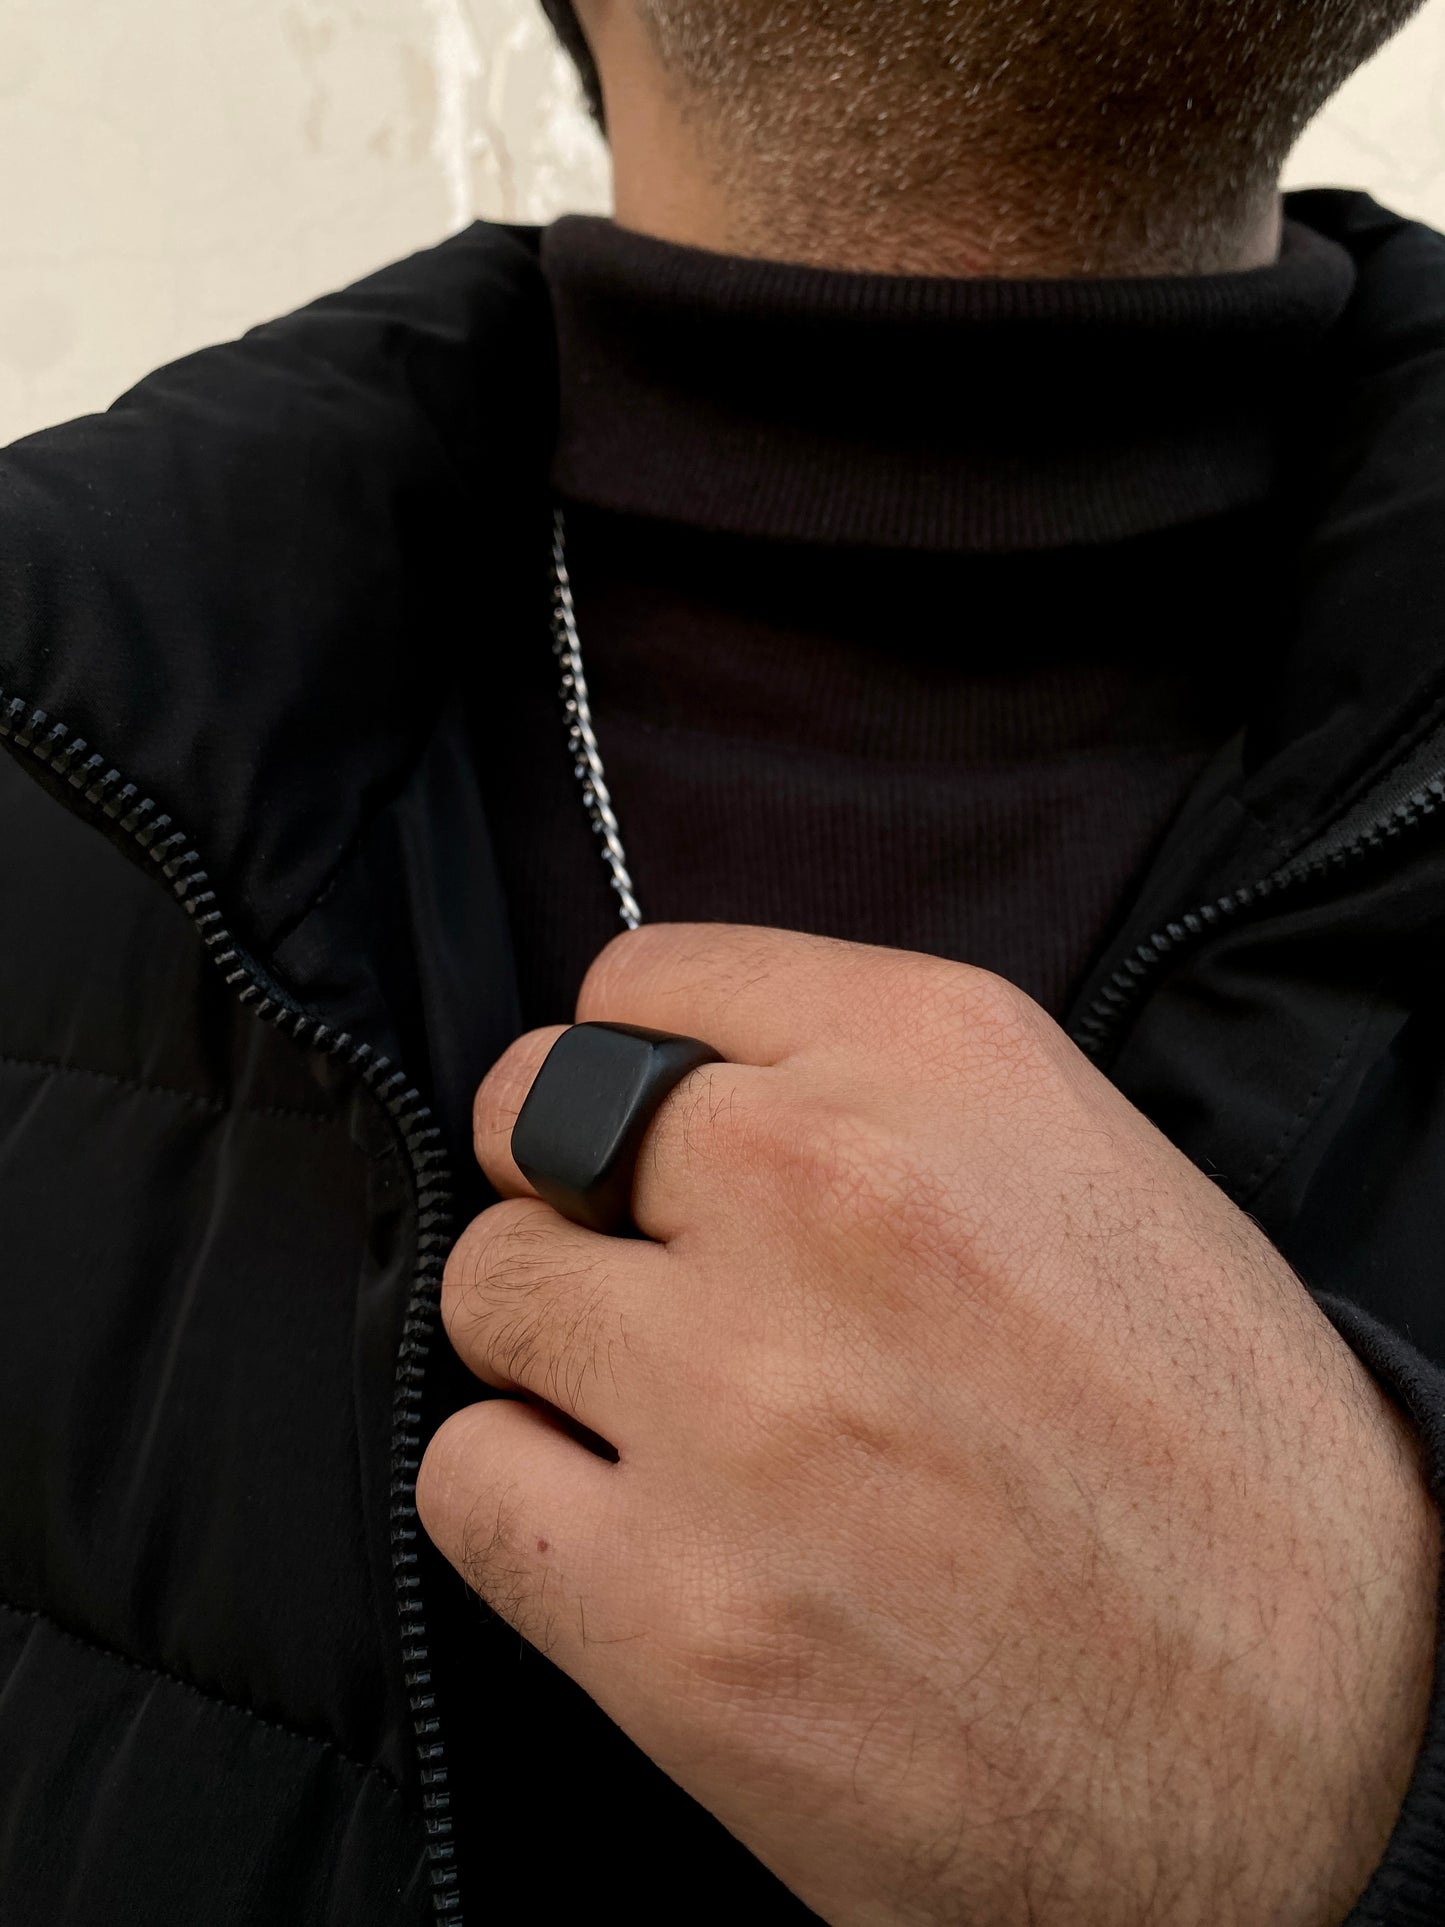 Matte Black Steel Ring